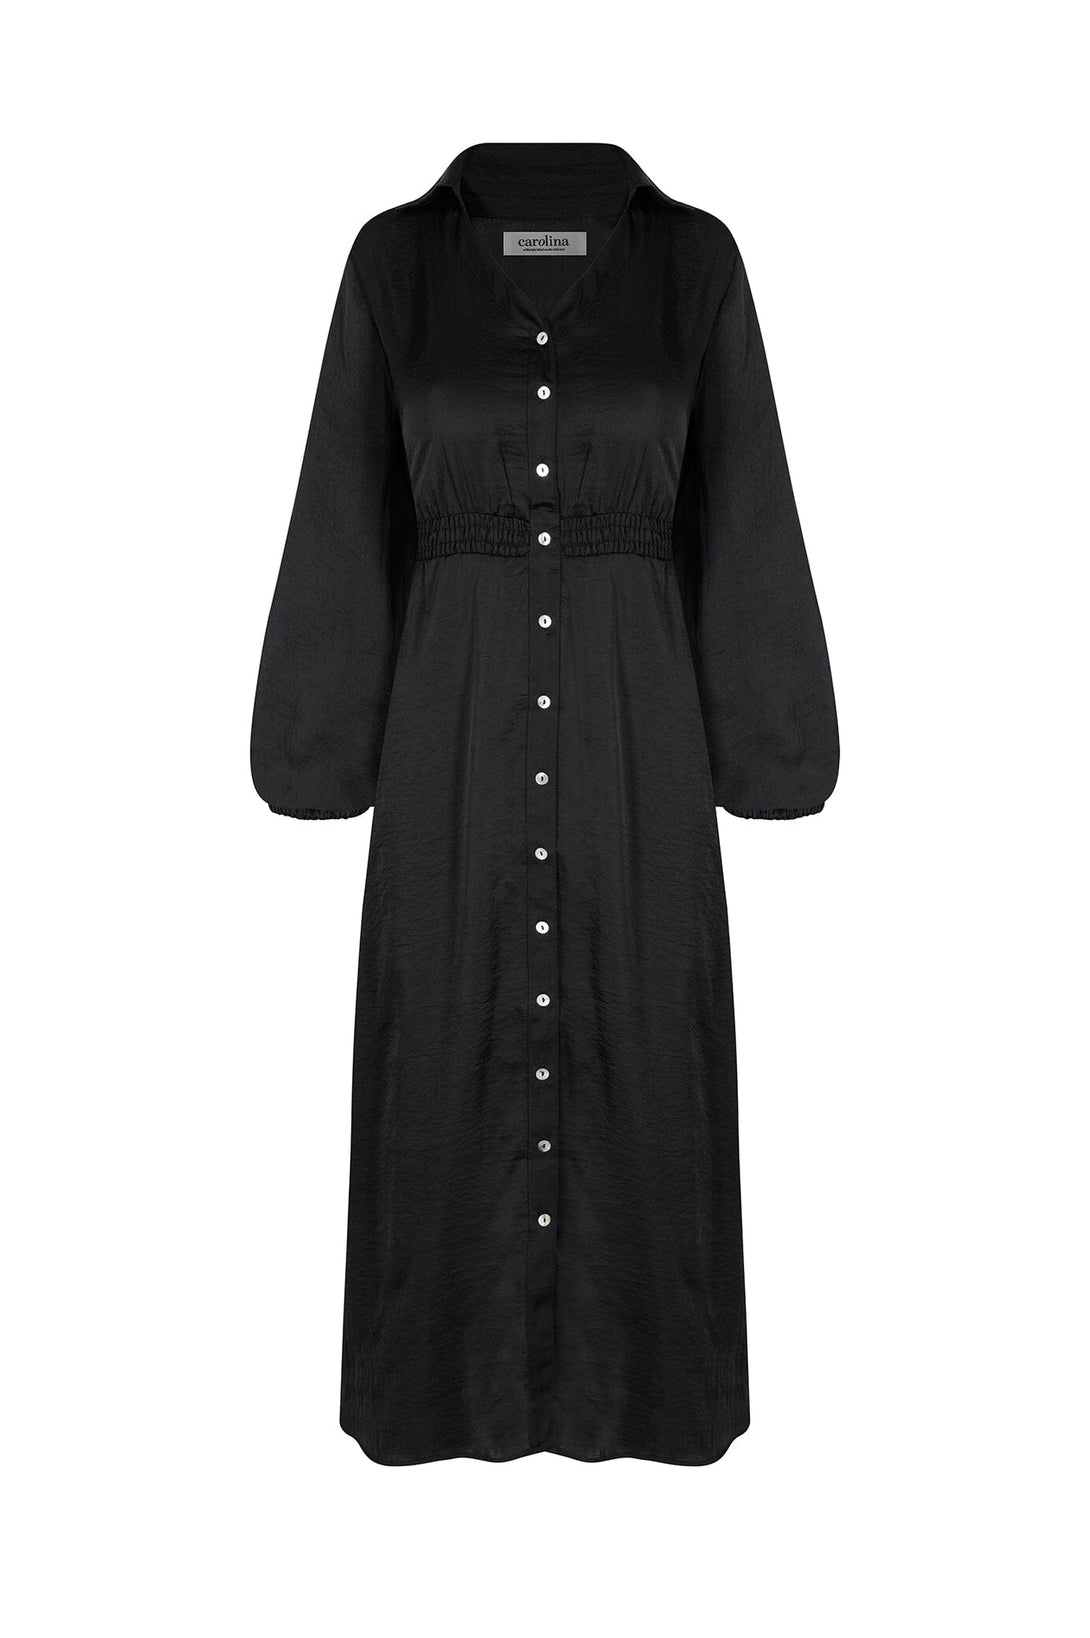 Georgina Long Sleeve Dress Black with Collar Dresses | Long Sleeve